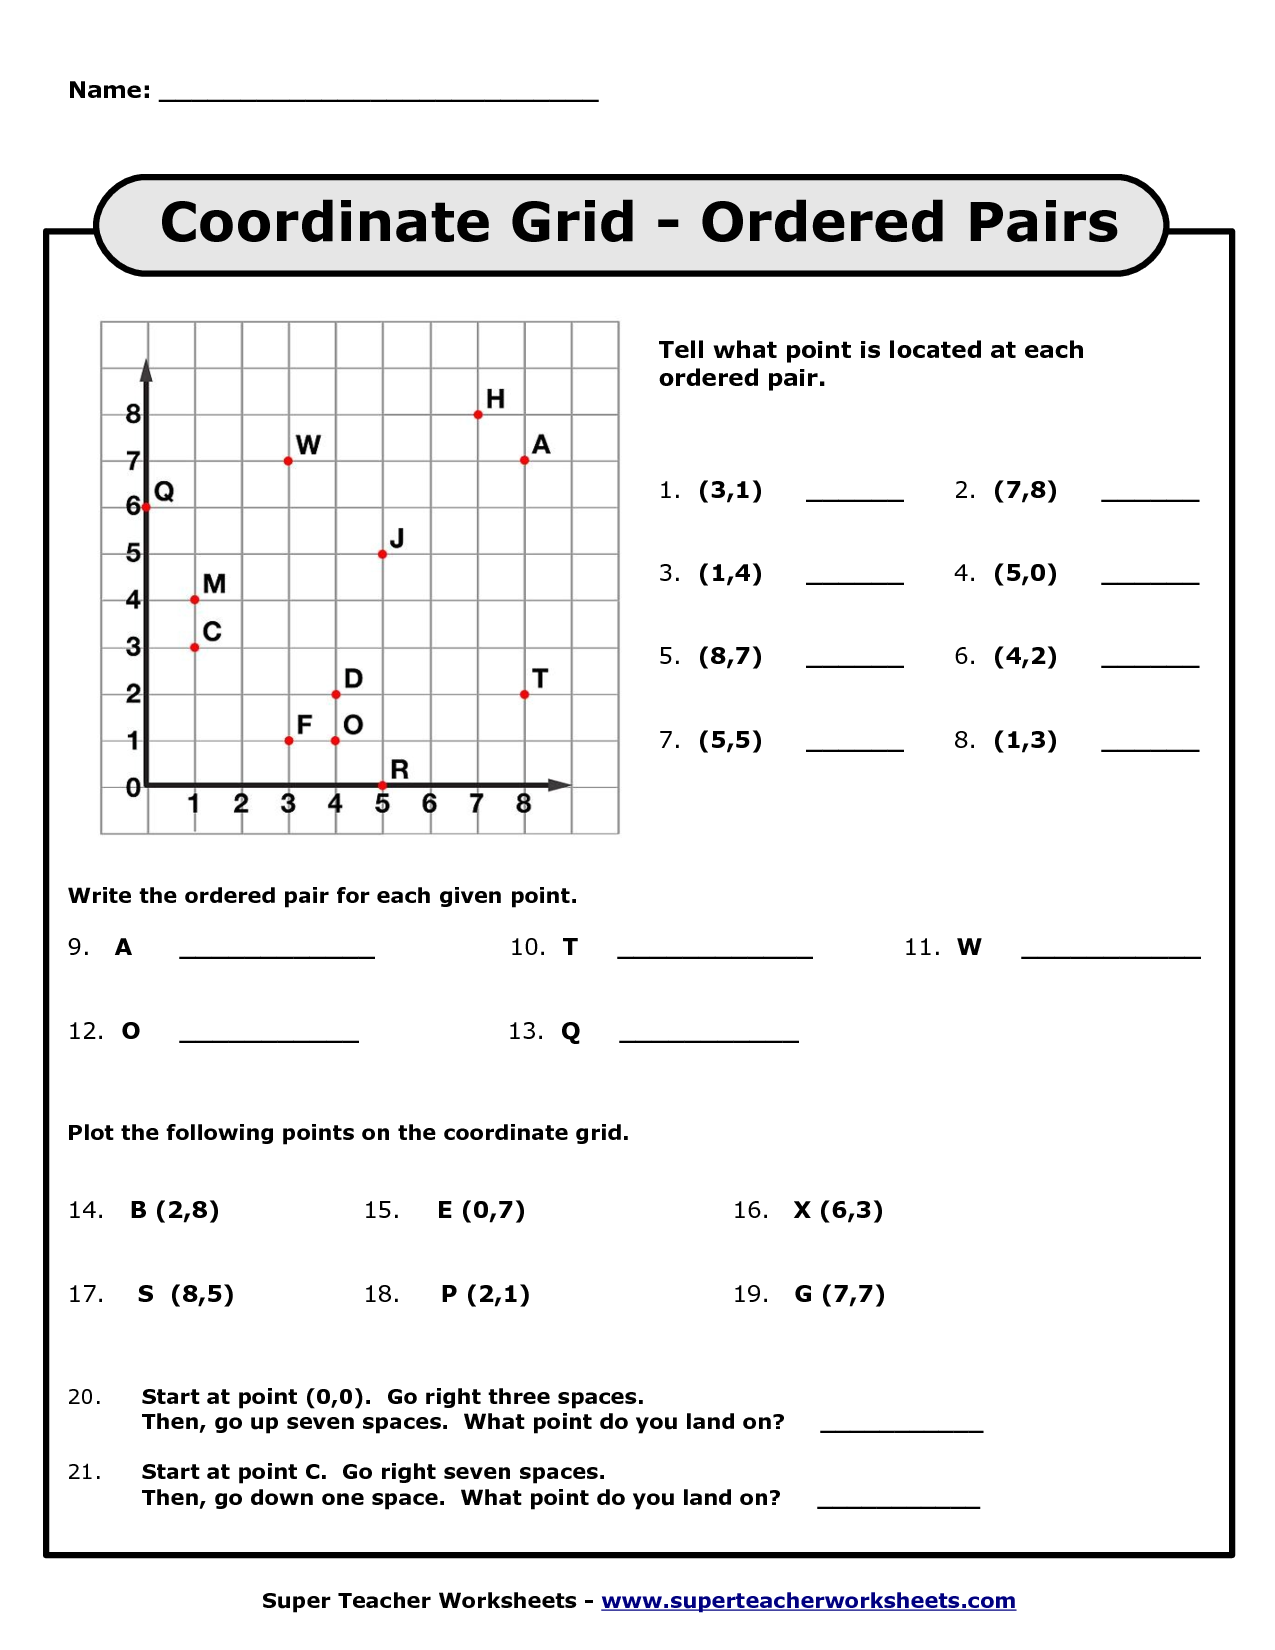 super-teacher-worksheets-coordinate-grid-answer-key